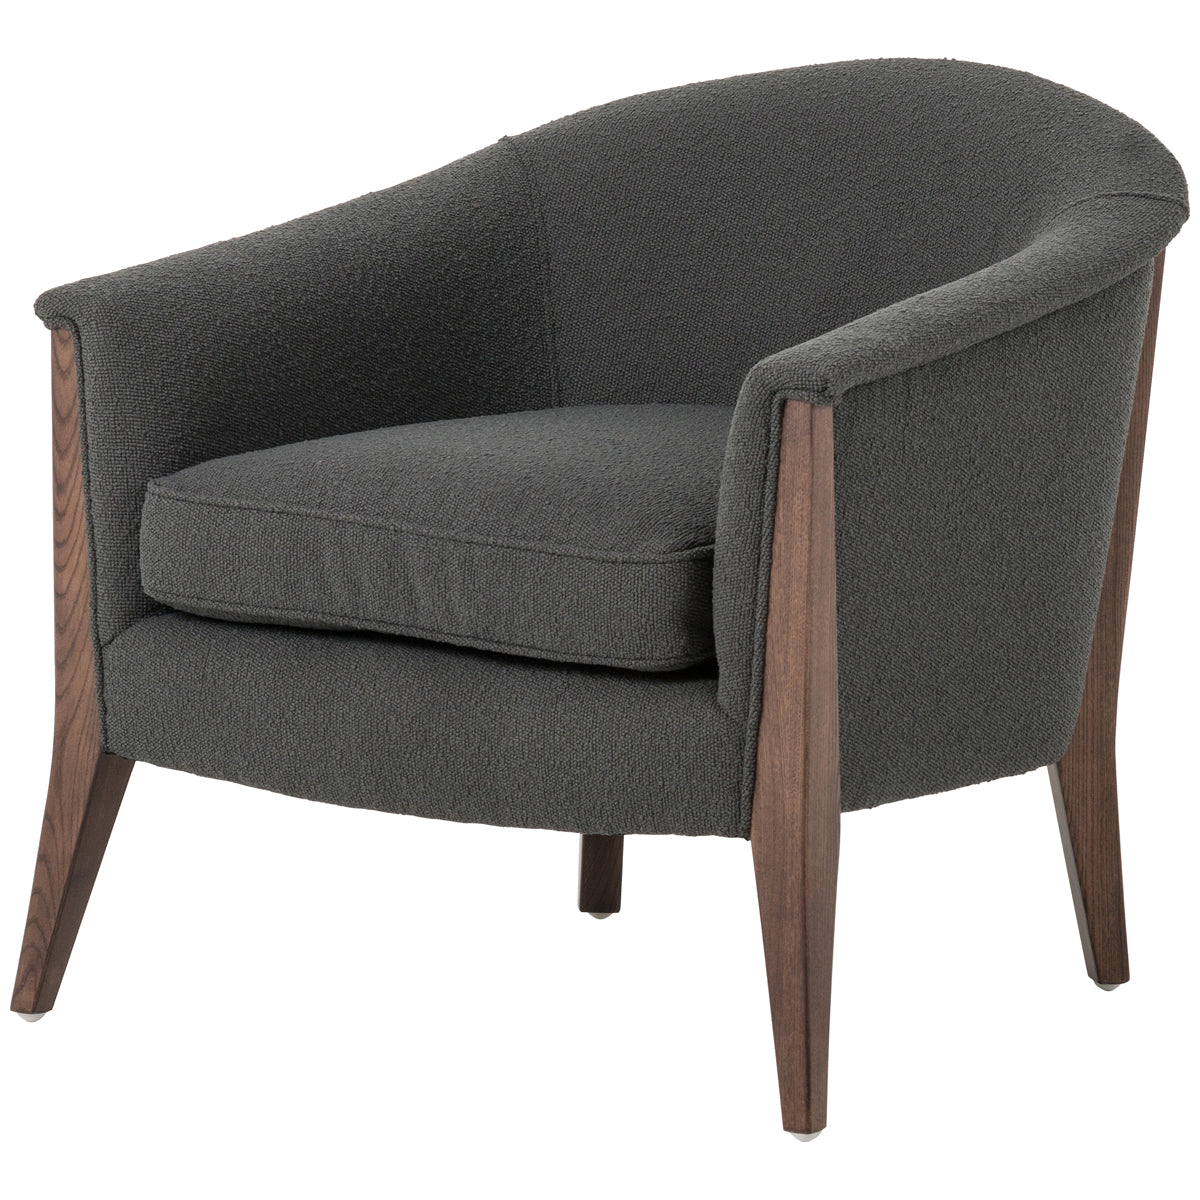 Four Hands Kensington Nomad Chair - Fiqa Boucle Charcoal